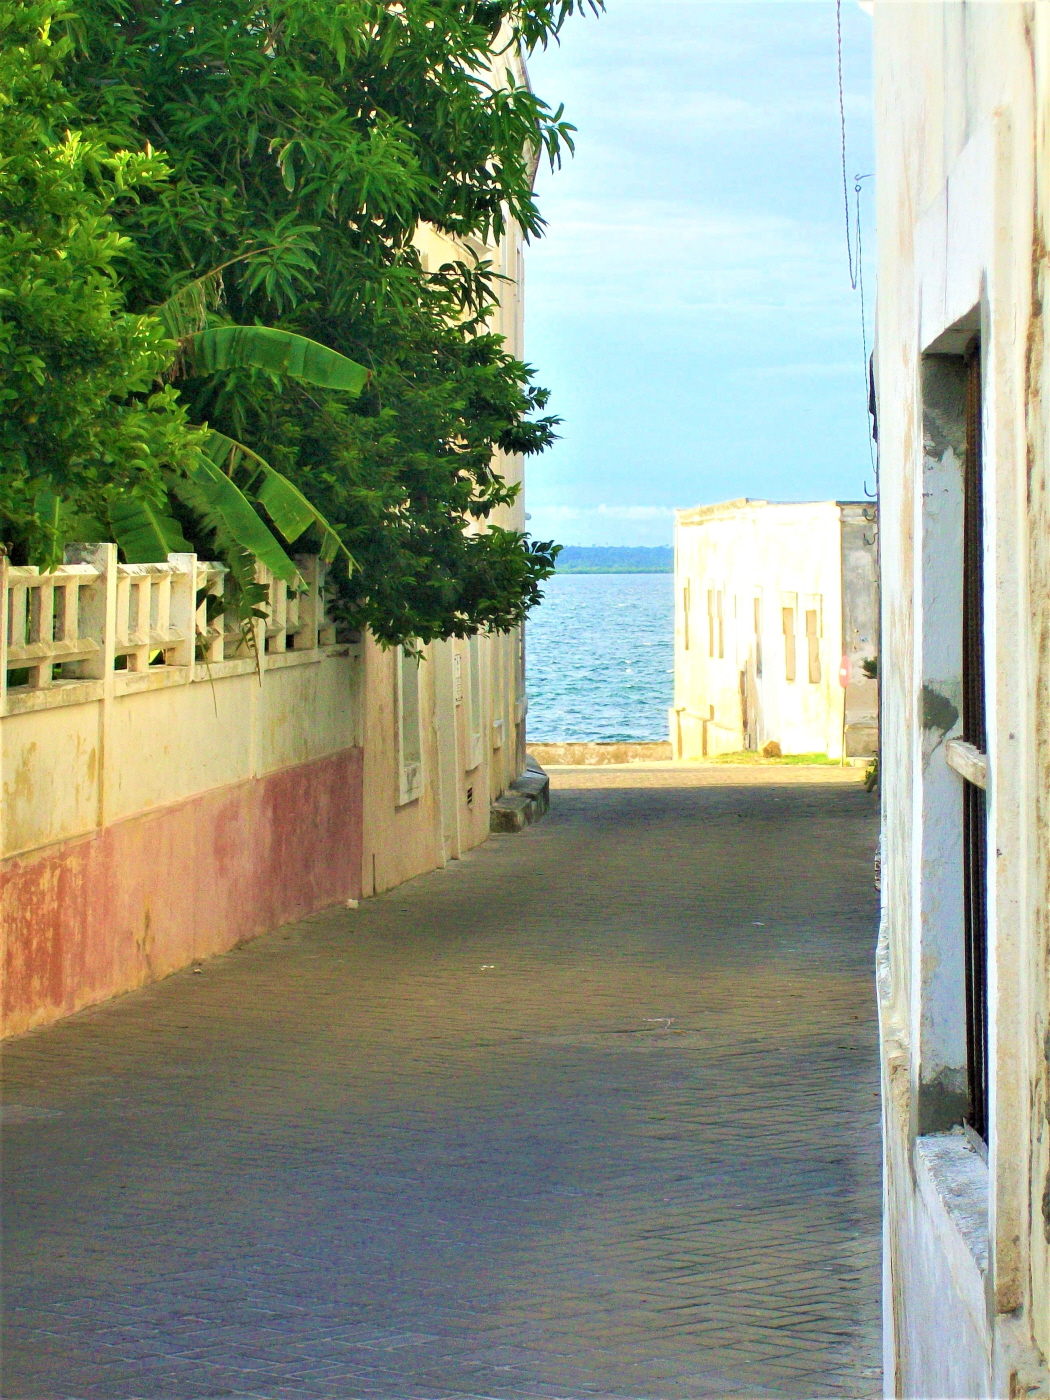 Street Scene - Mozambique Island, A UNESCO World Heritage Site - Mozambique